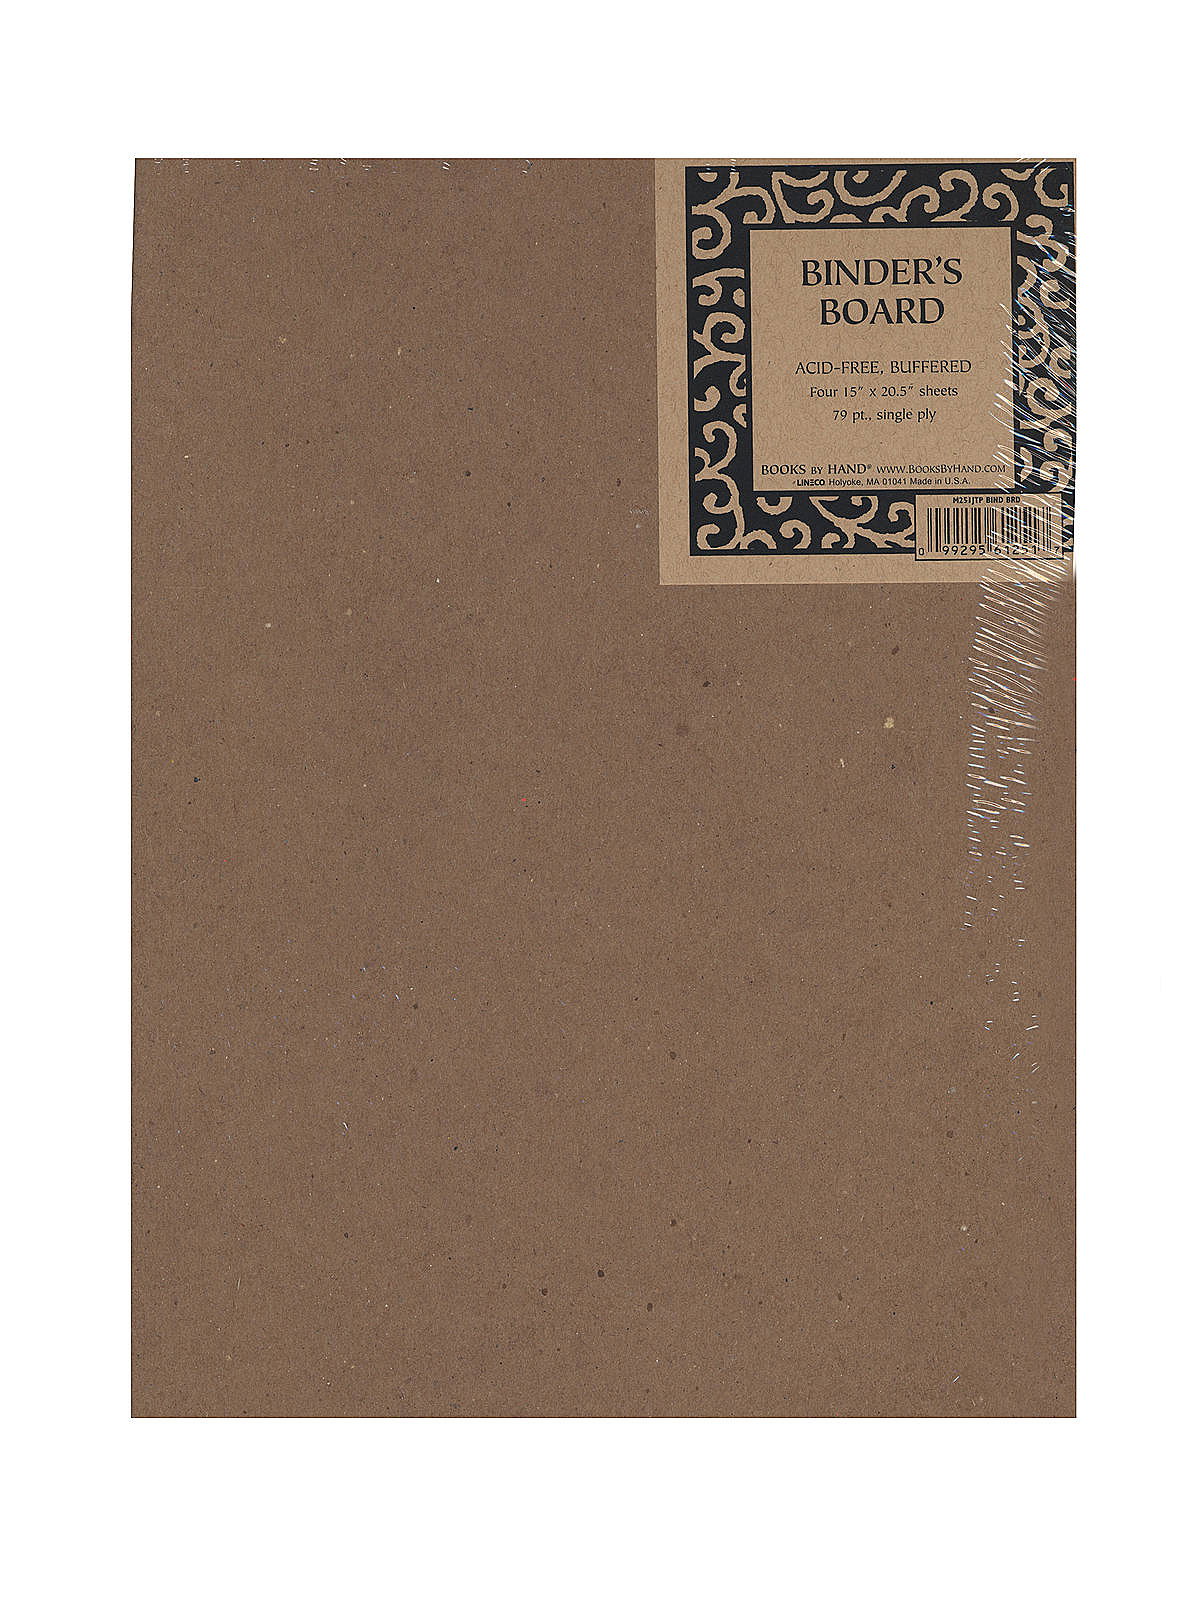 Buy 59pt Brown Book Board Binding Covers - 25pk